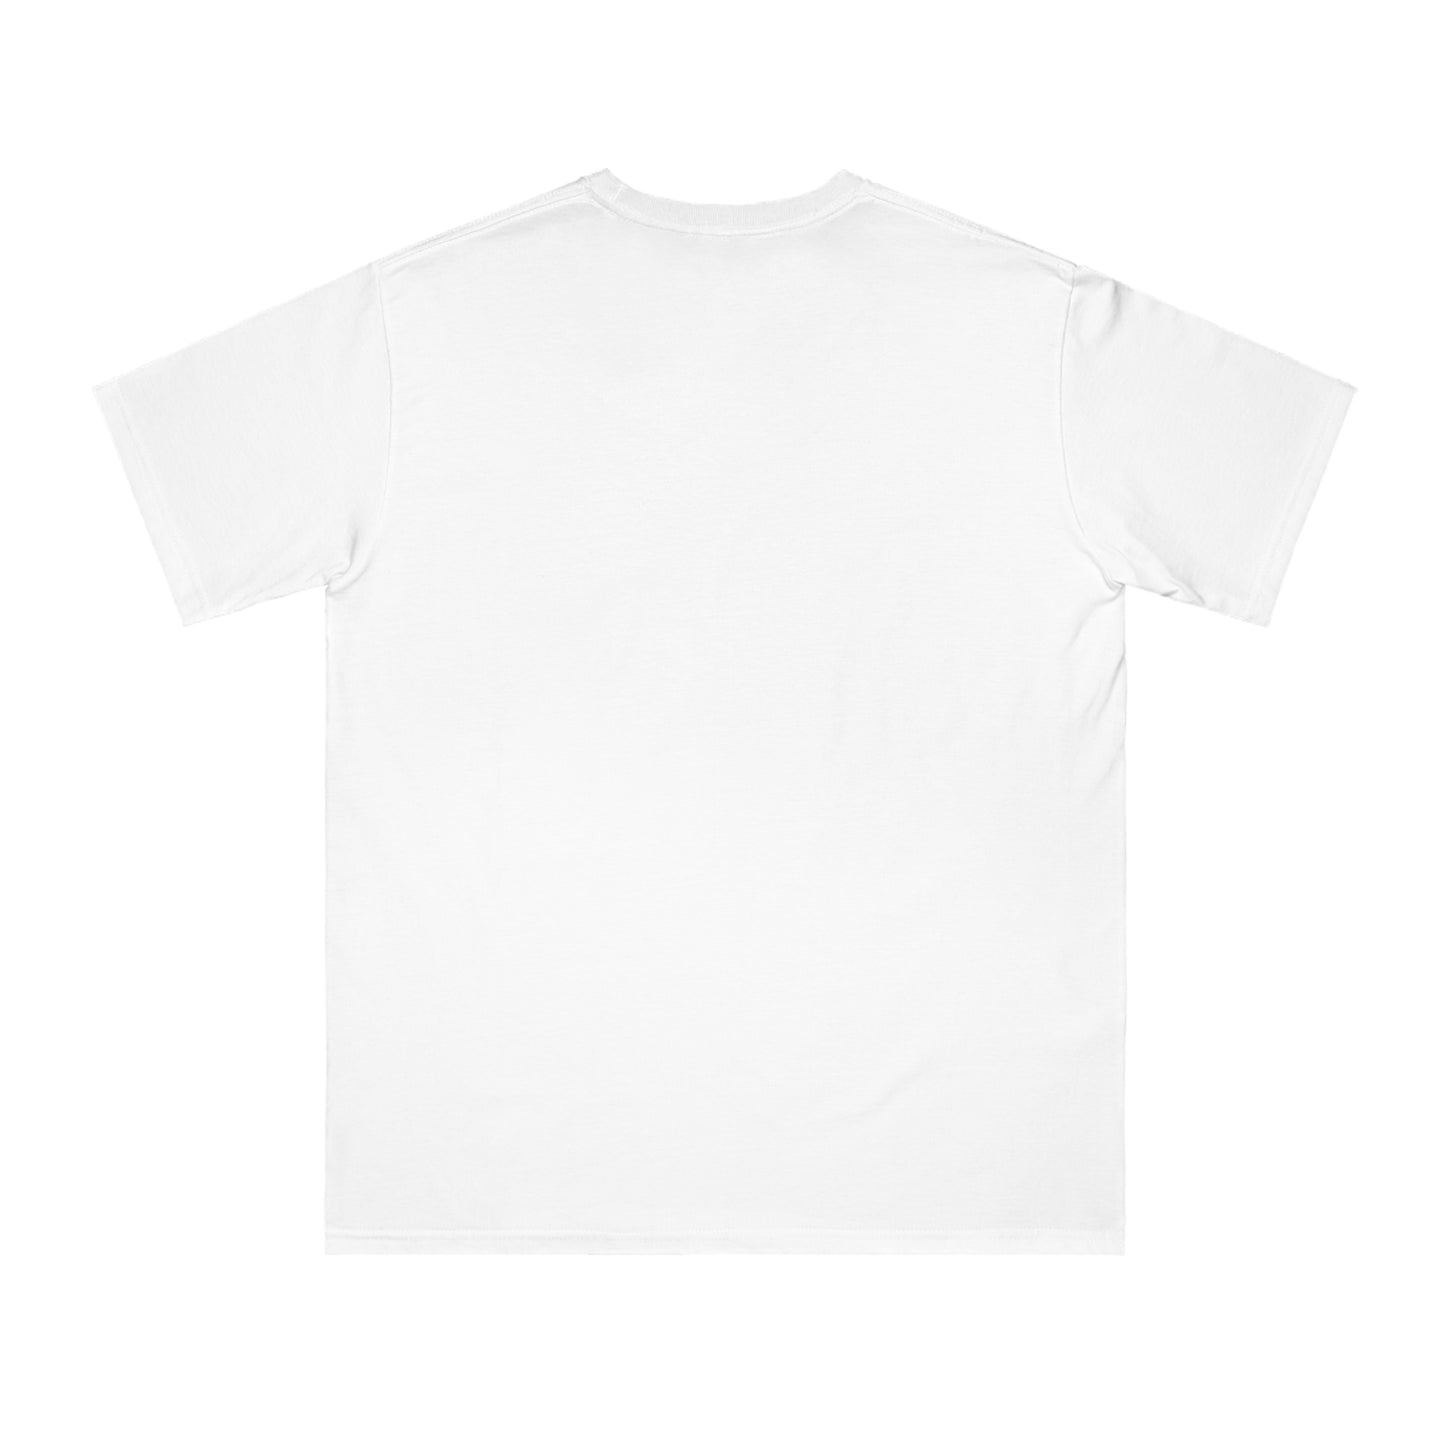 'Detroit' T-Shirt (Small SUV Brand Parody) | Organic Unisex